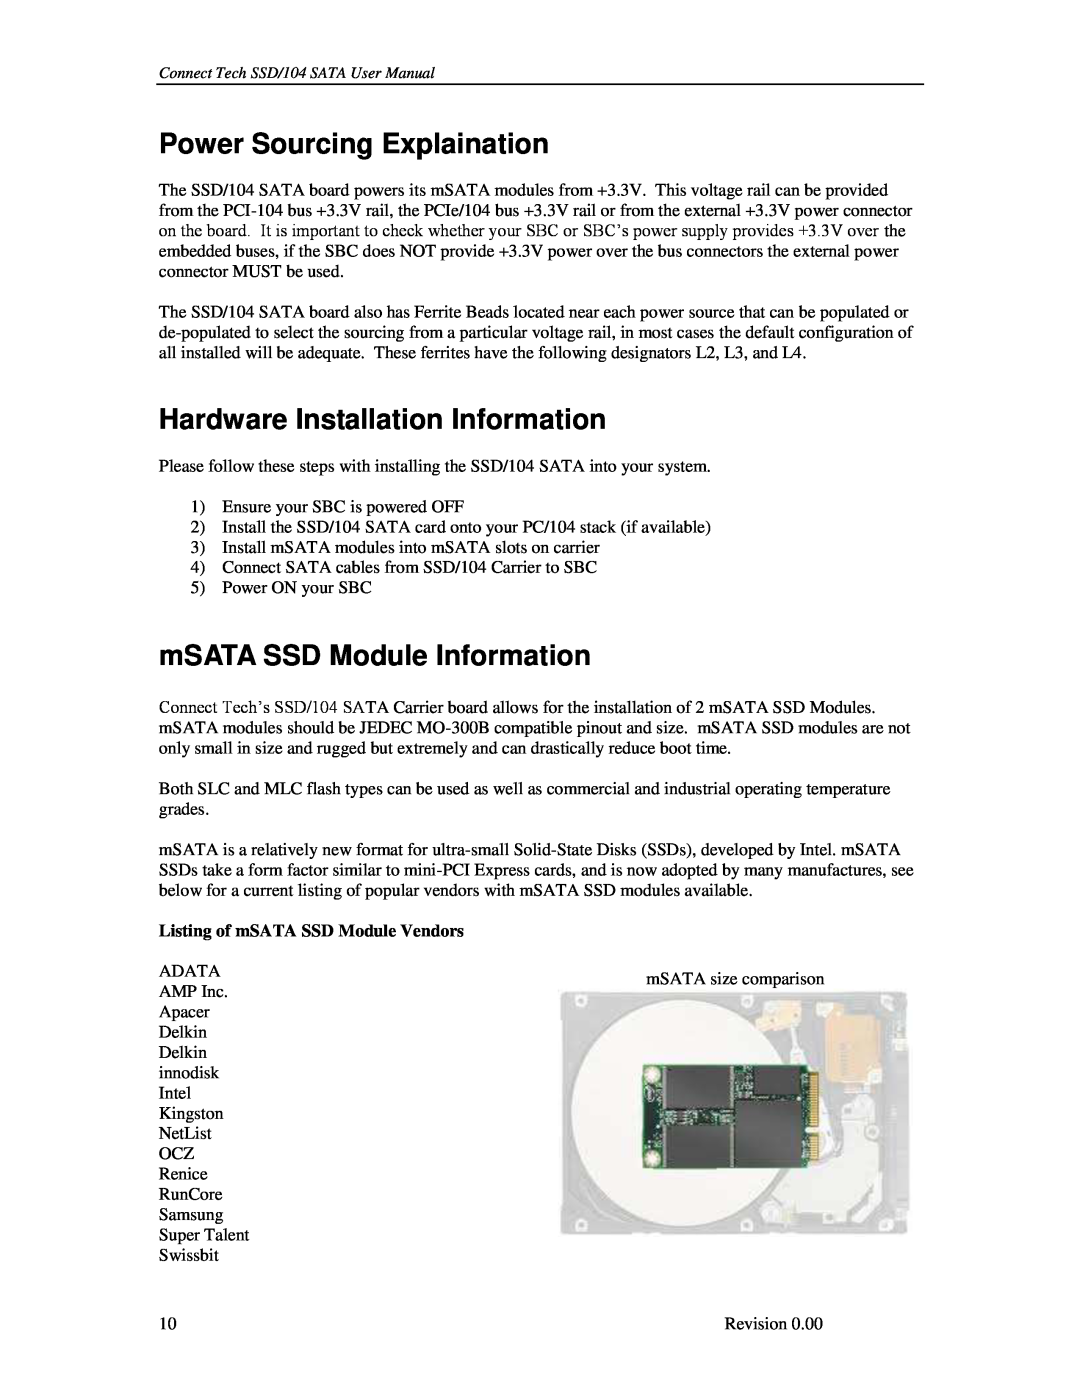 Connect Tech SSD/104 Power Sourcing Explaination, Hardware Installation Information, mSATA SSD Module Information 